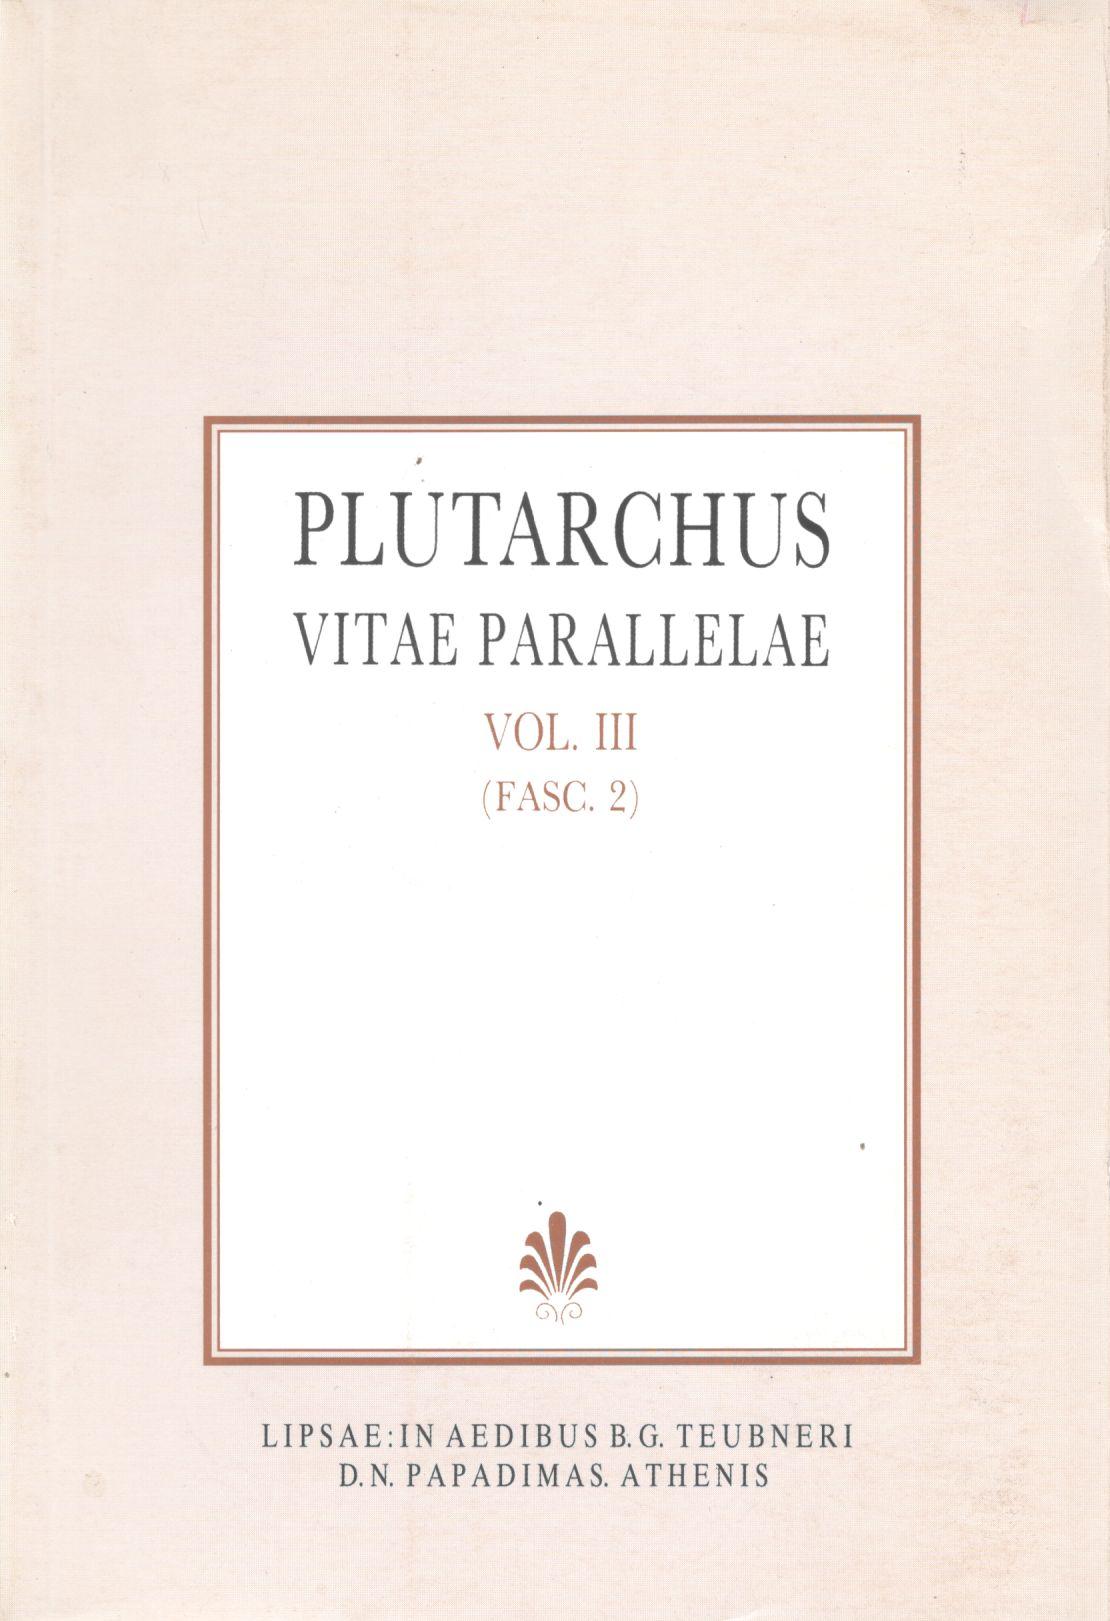 PLUTARCHI, VITAE PARALLELAE, VOL. III, (FASC. 2), [ΠΛΟΥΤΑΡΧΟΥ, ΒΙΟΙ ΠΑΡΑΛΛΗΛΟΙ, Τ. Γ